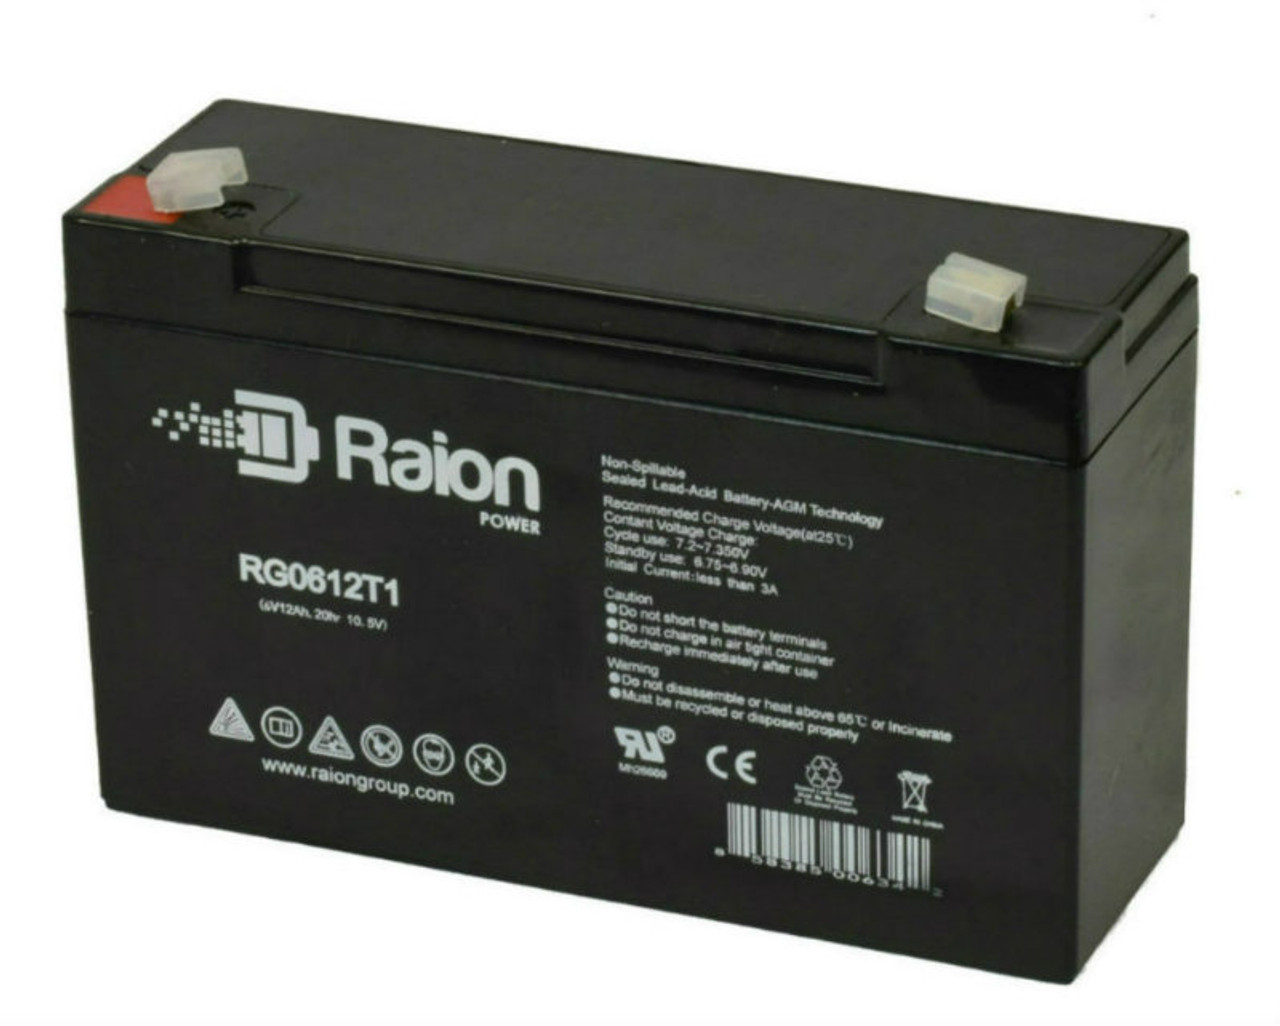 Raion Power RG06120T1 6V 12Ah Replacement UPS Battery Cartridge for Upsonic LAN 75